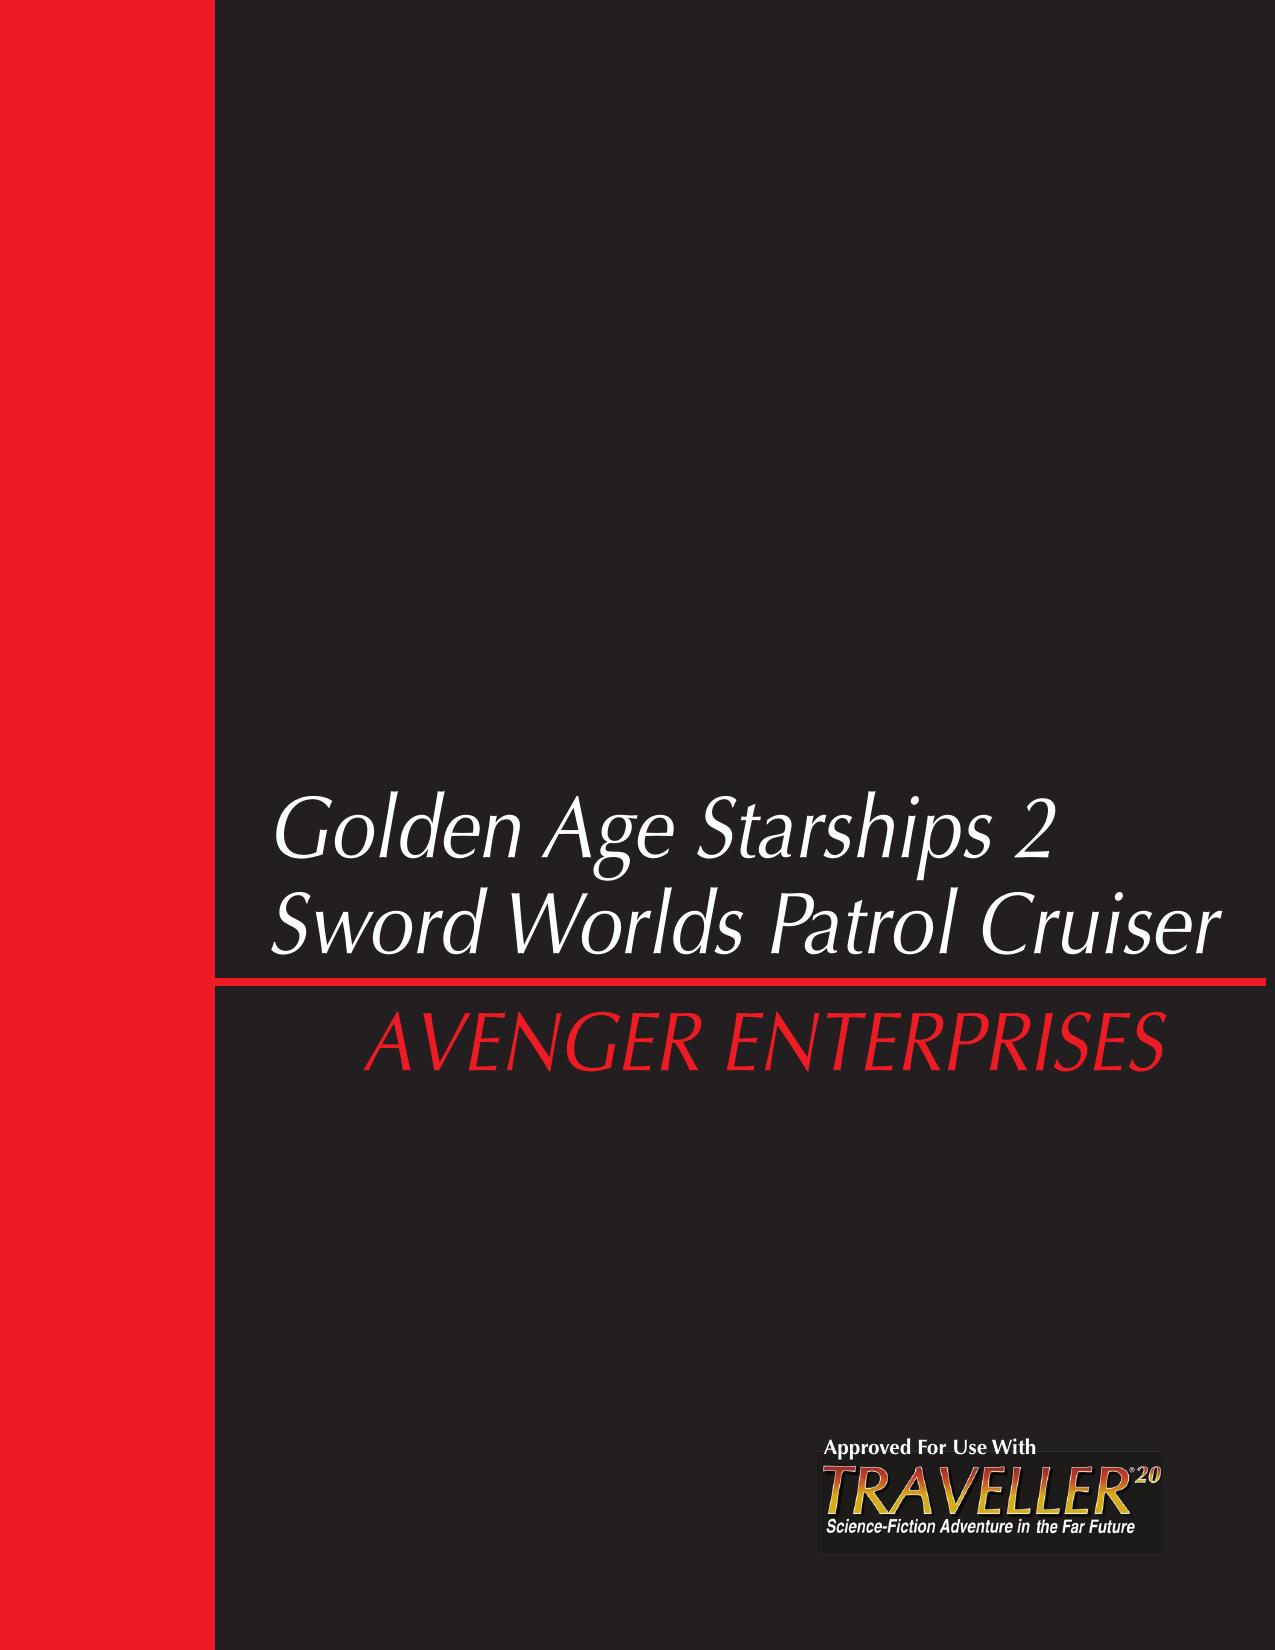 Sword Worlds Patrol Cruiser